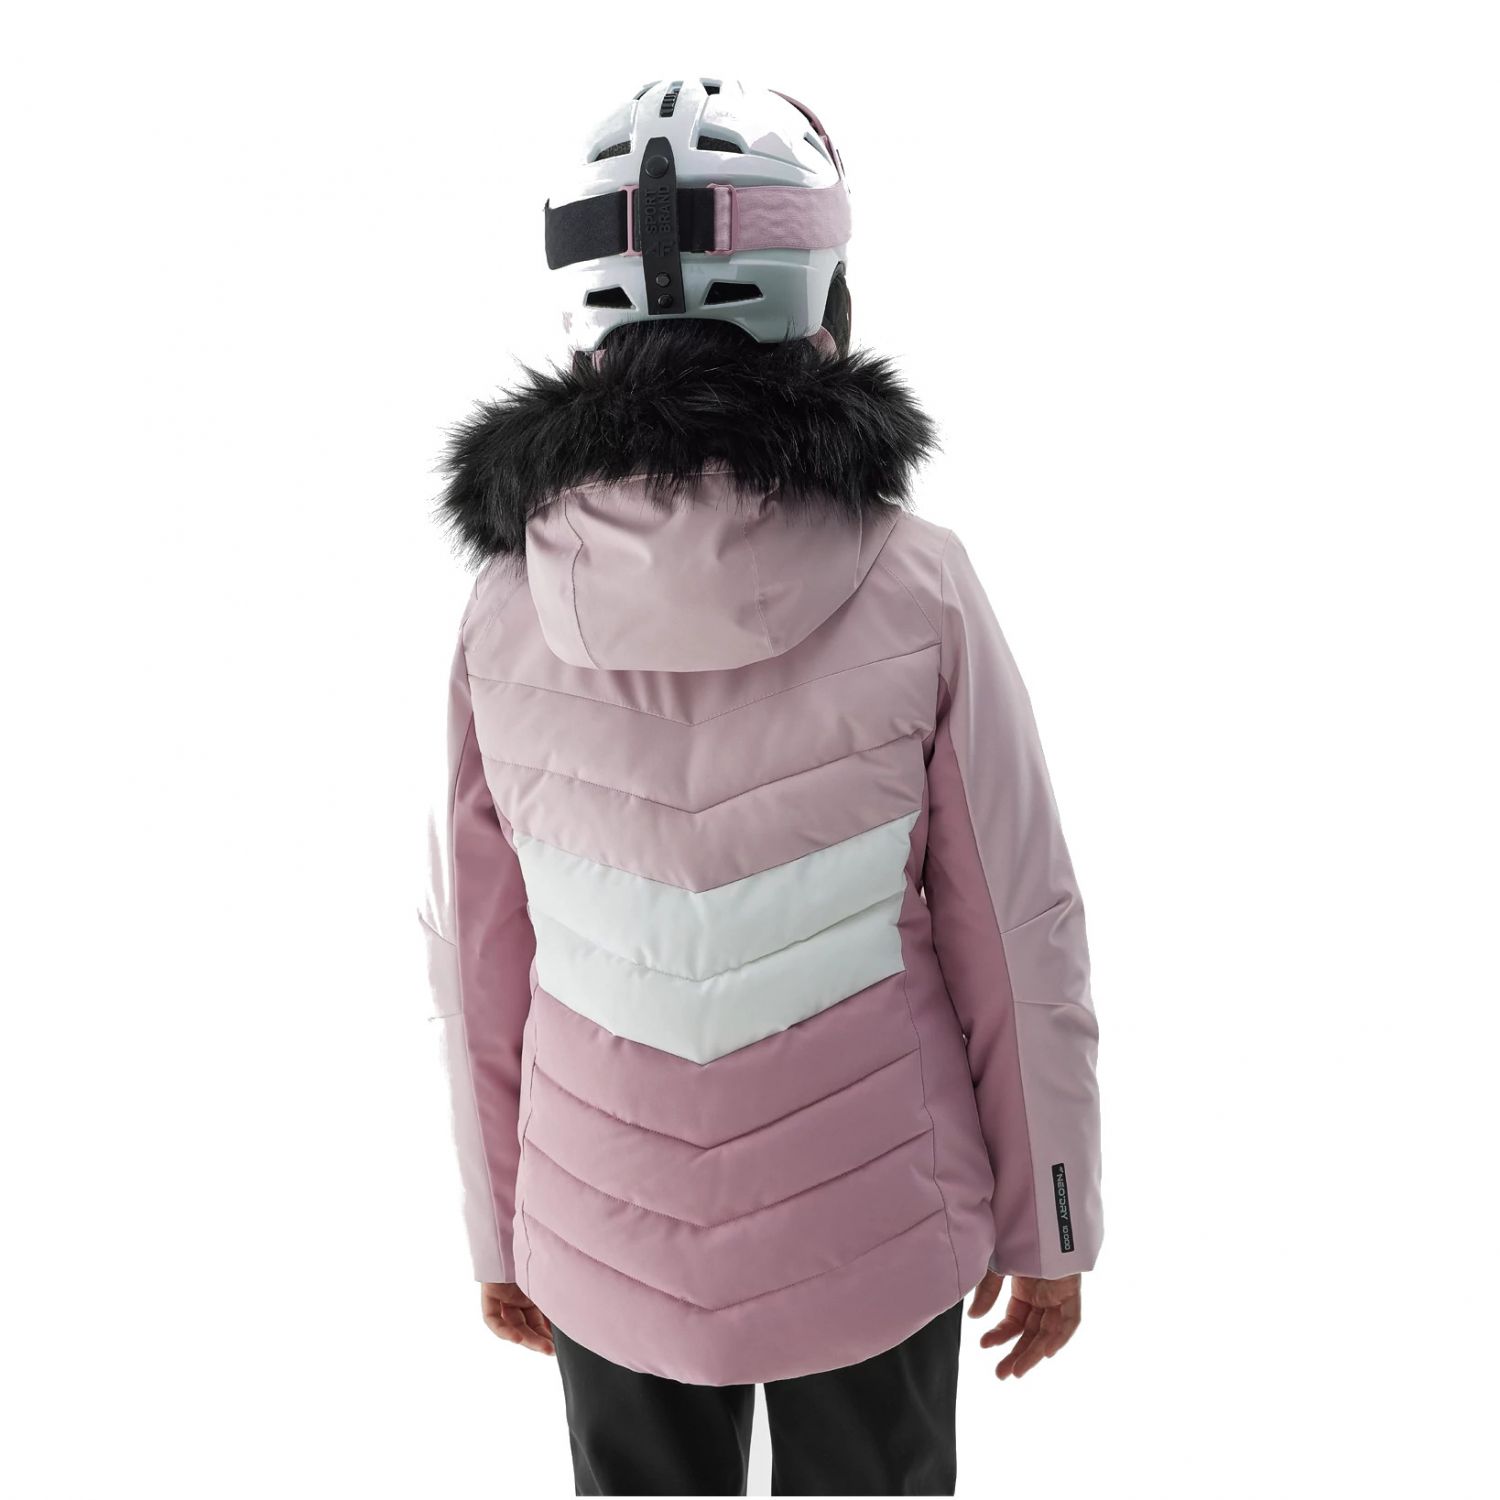 4F Amanda, ski jacket, junior, dark pink